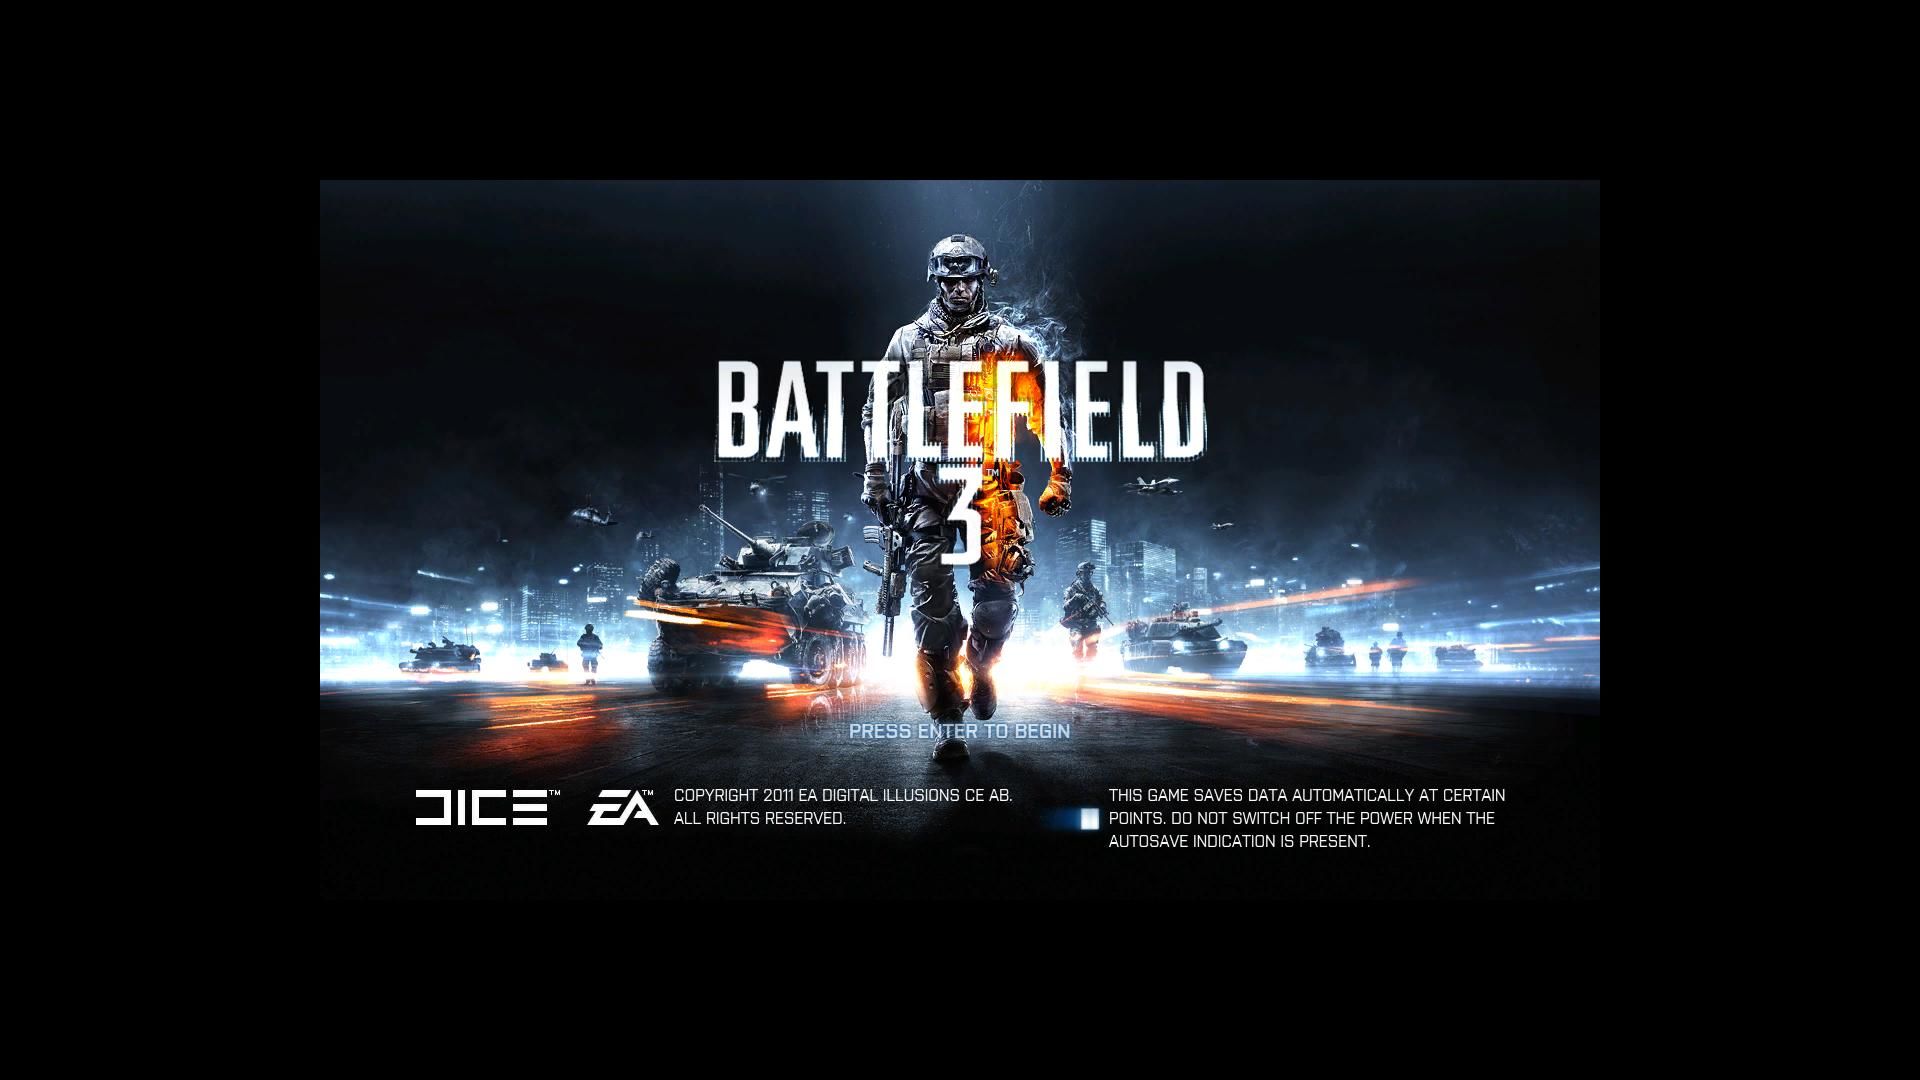 Battlefield 3 main menu.